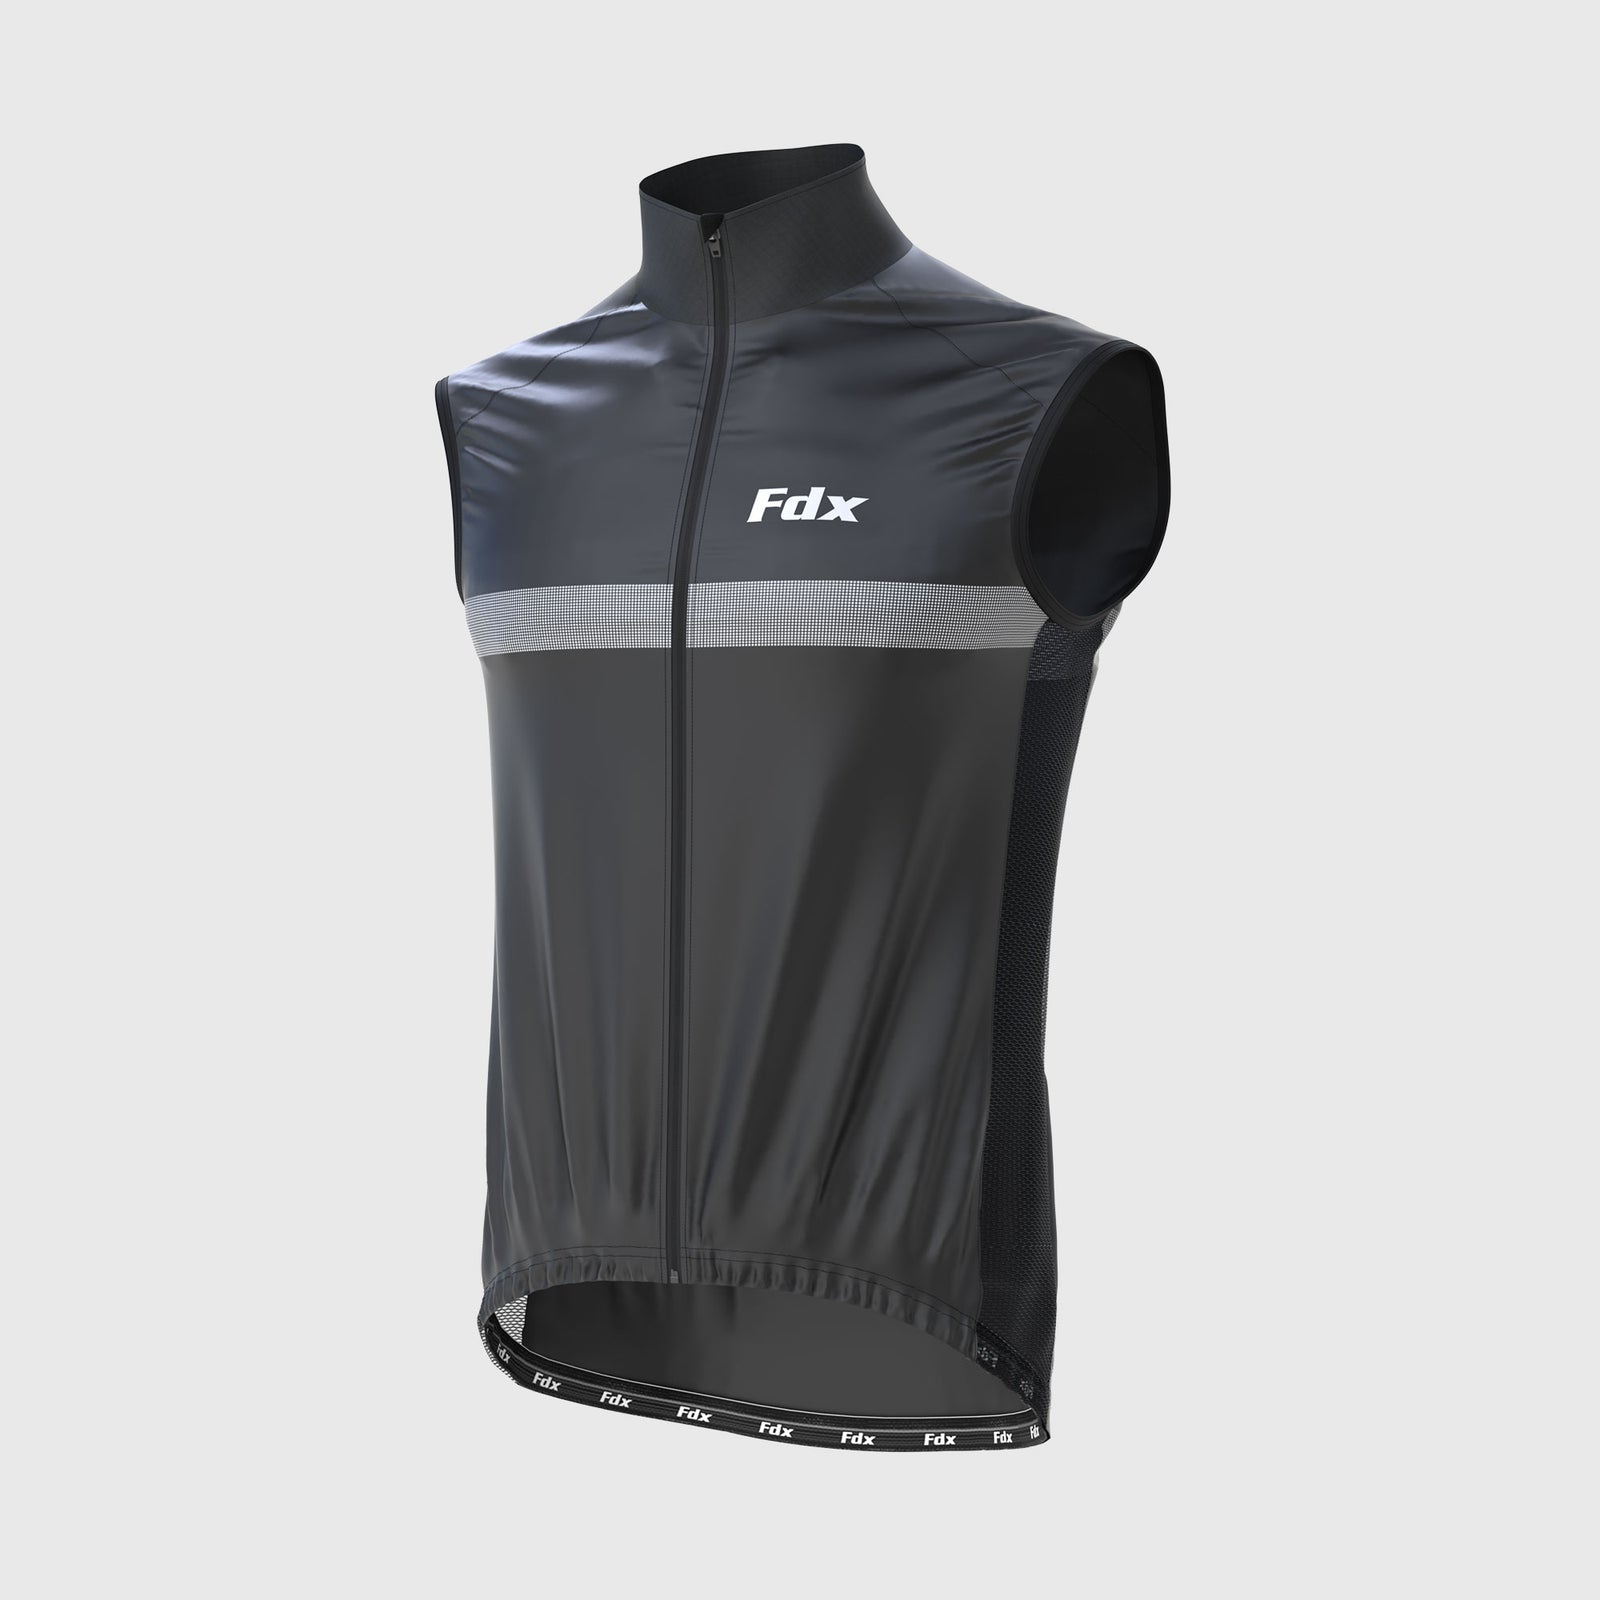 Fdx Men's Black Cycling Gilet Sleeveless Vest for Winter Clothing 360° Reflective, Lightweight, Windproof, Waterproof & Pockets